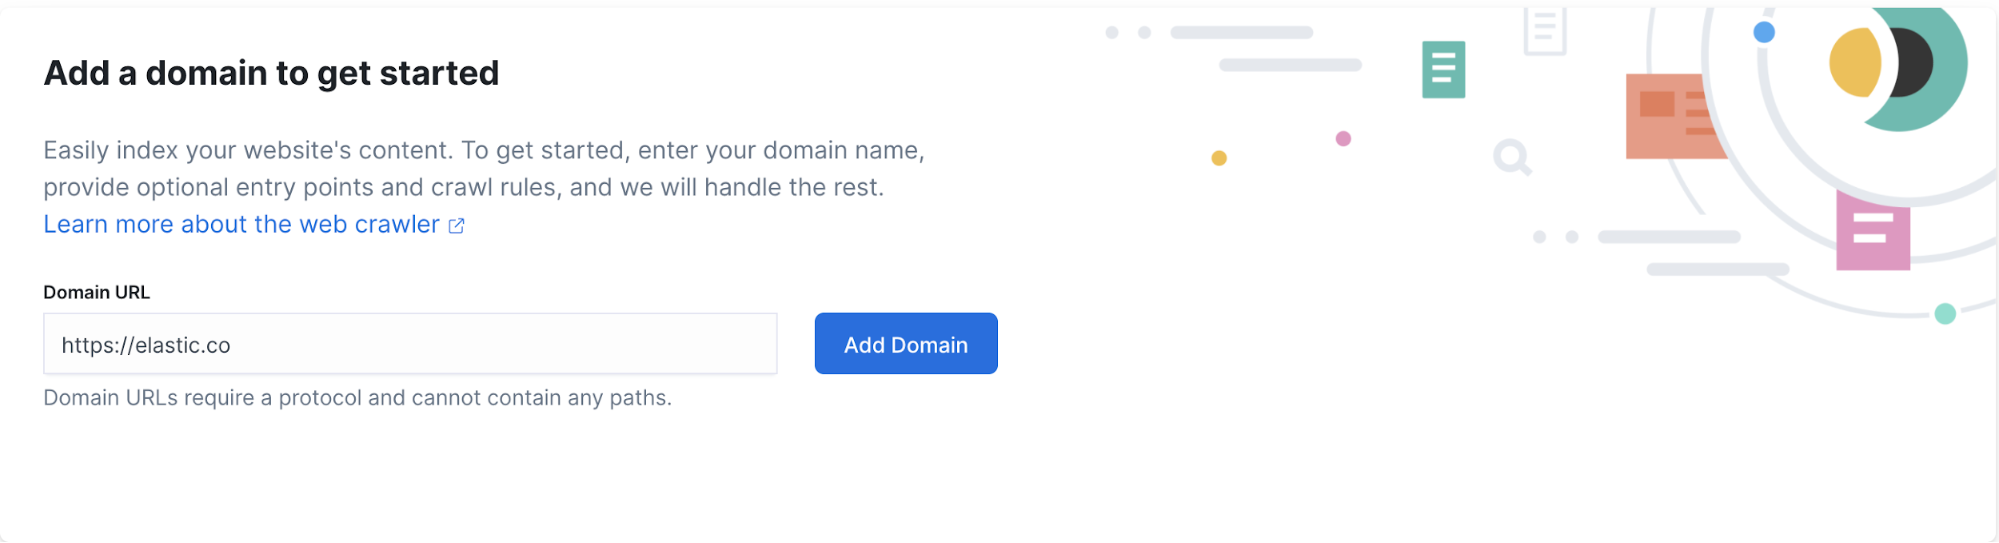 Add a domain URL